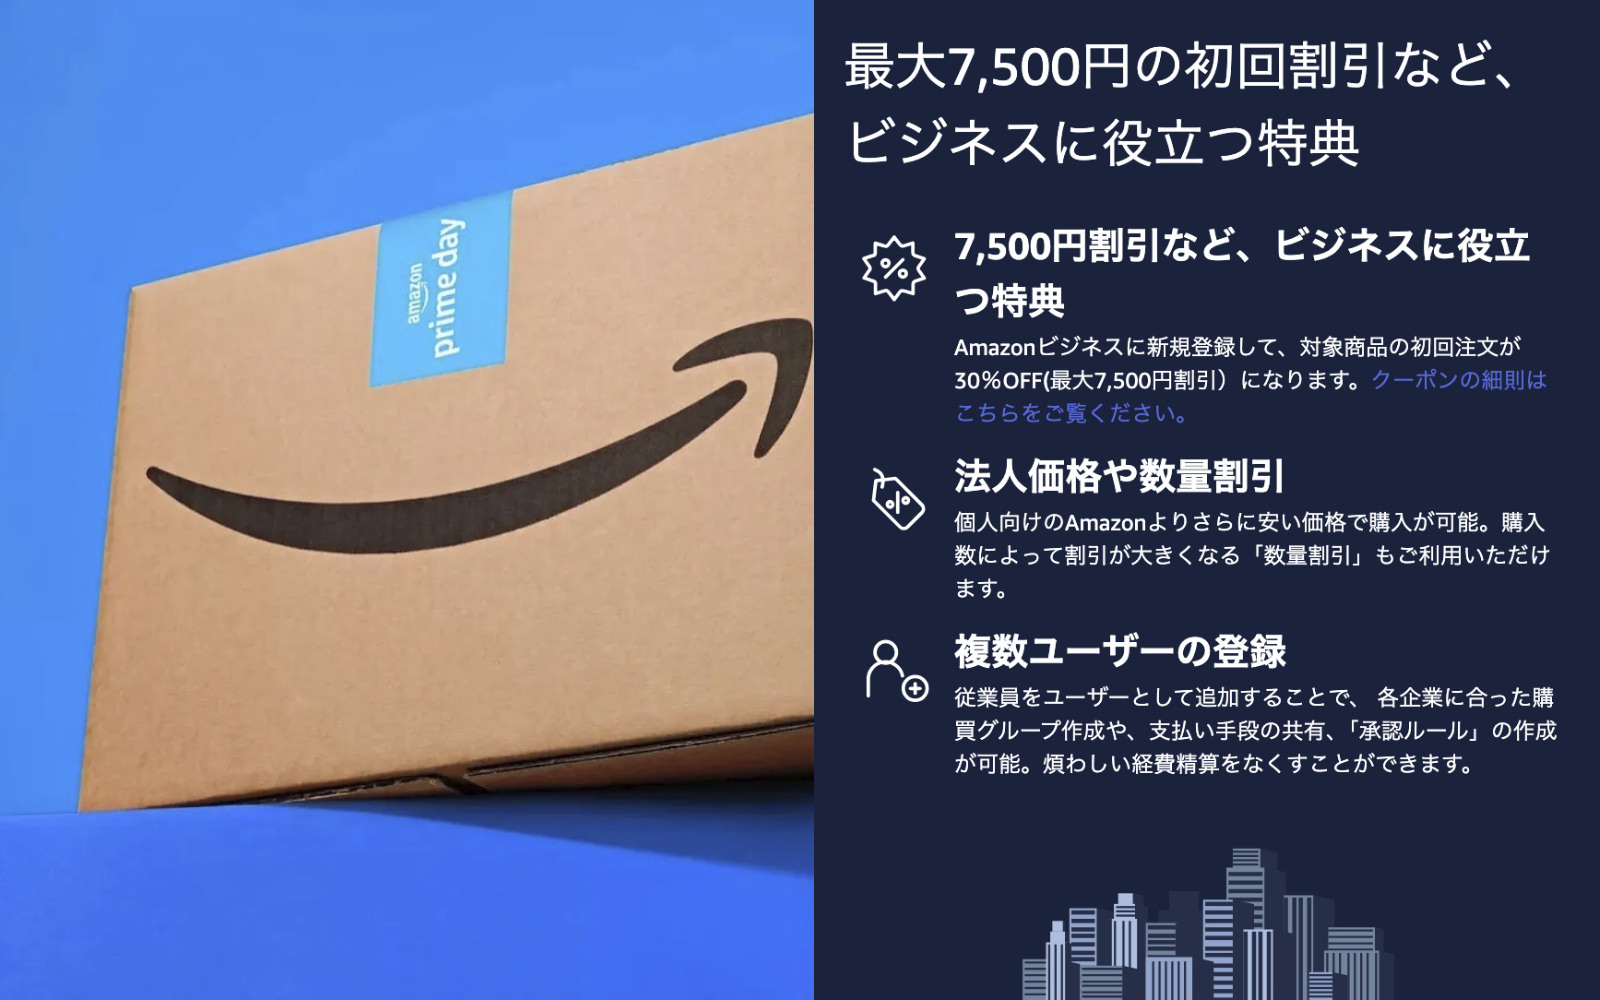 Amazon business campaign